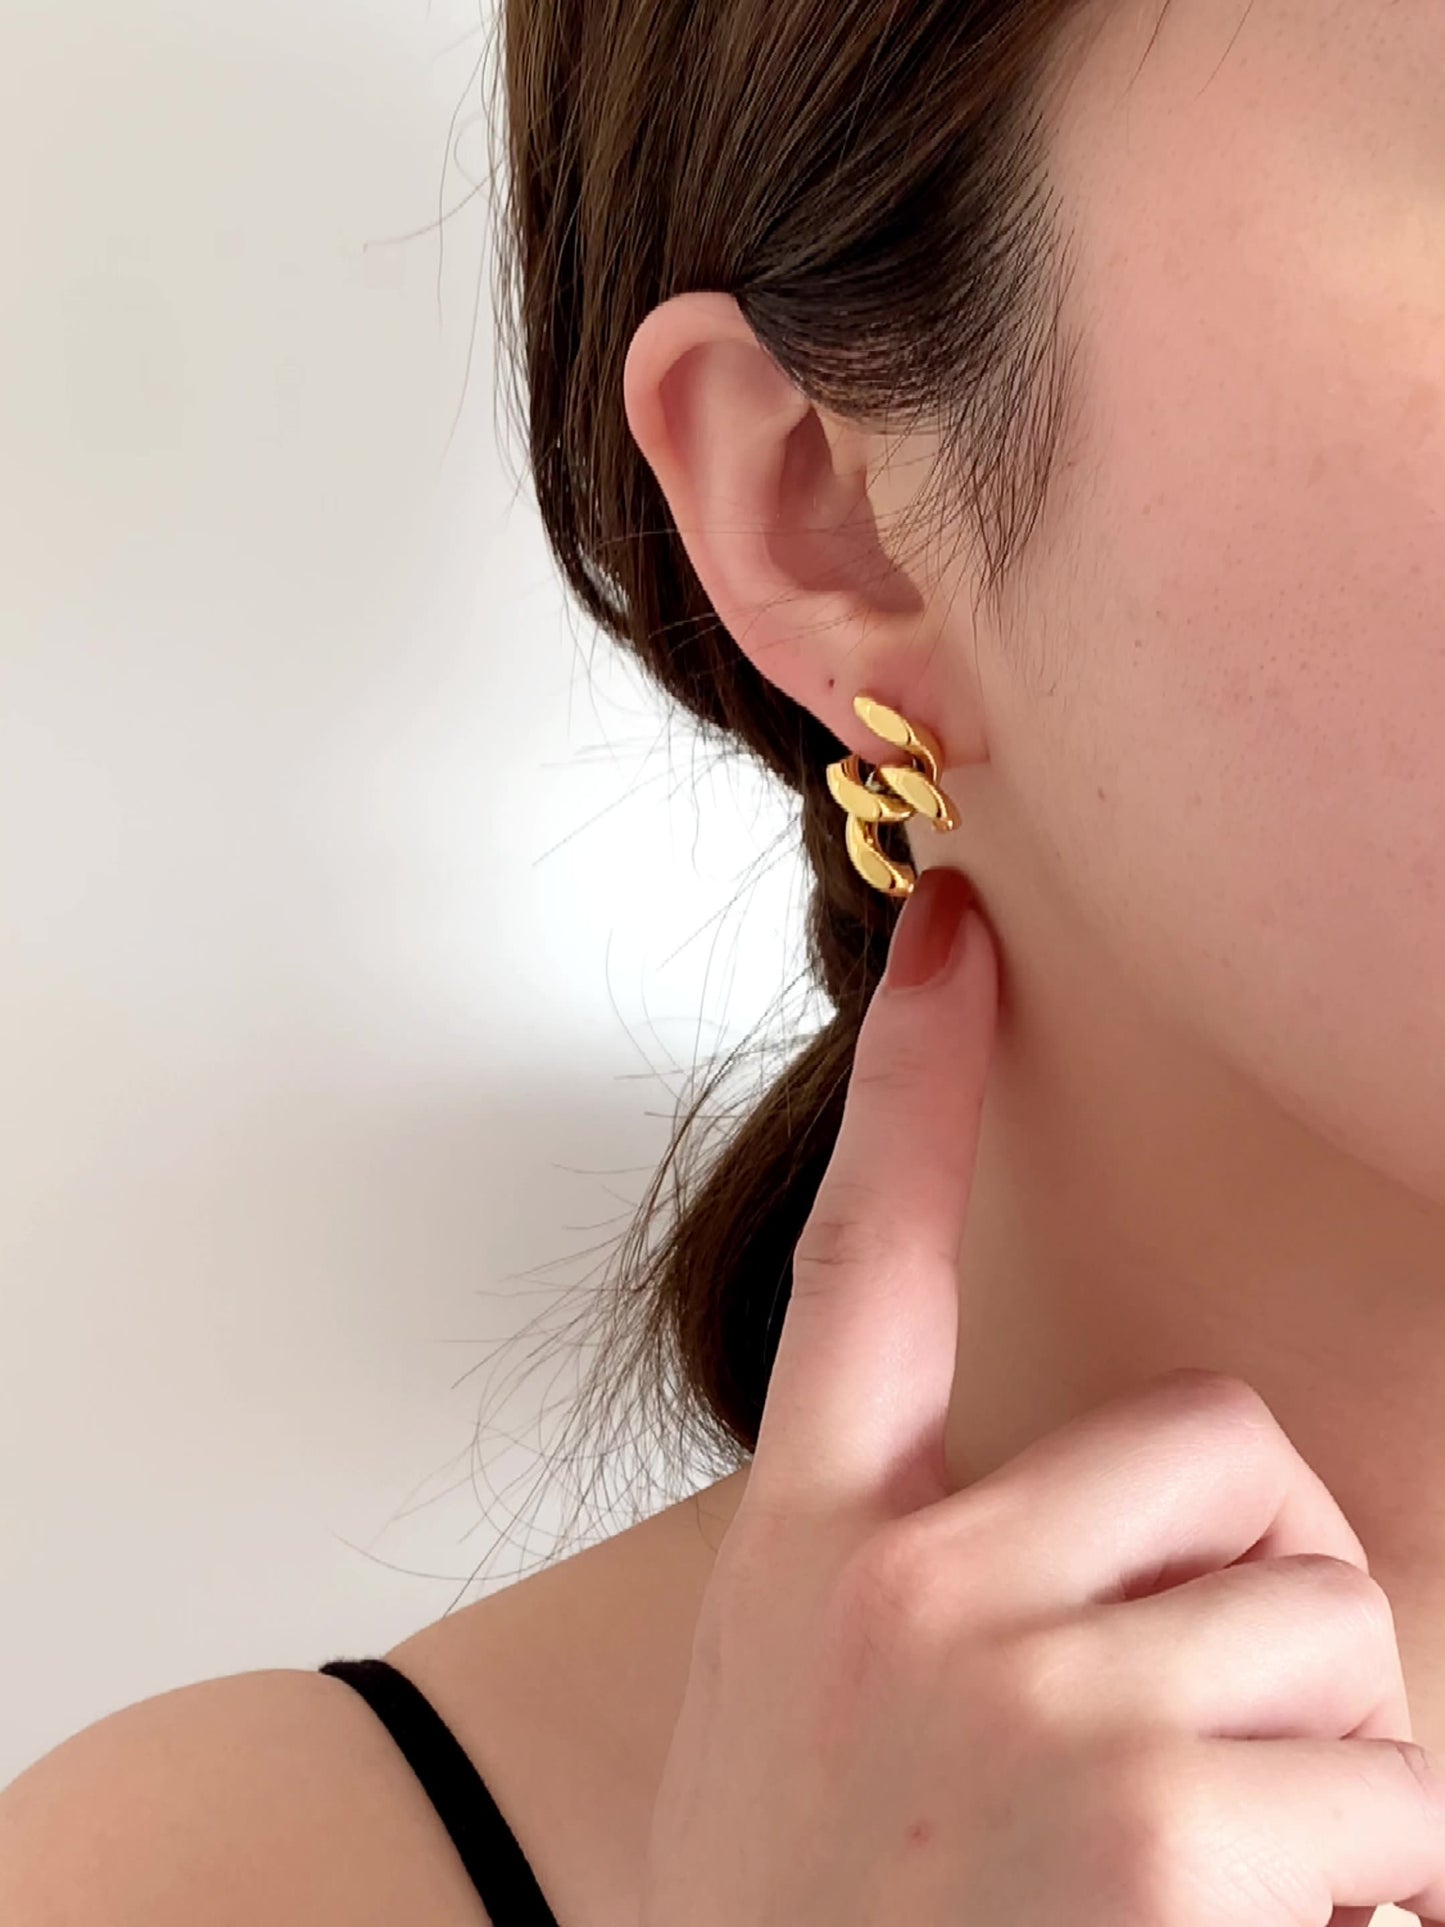 Retro Personality Titanium Steel Gold Plated Chain Earrings High Street Accessories Fashion Cross Irregular Earrings Women